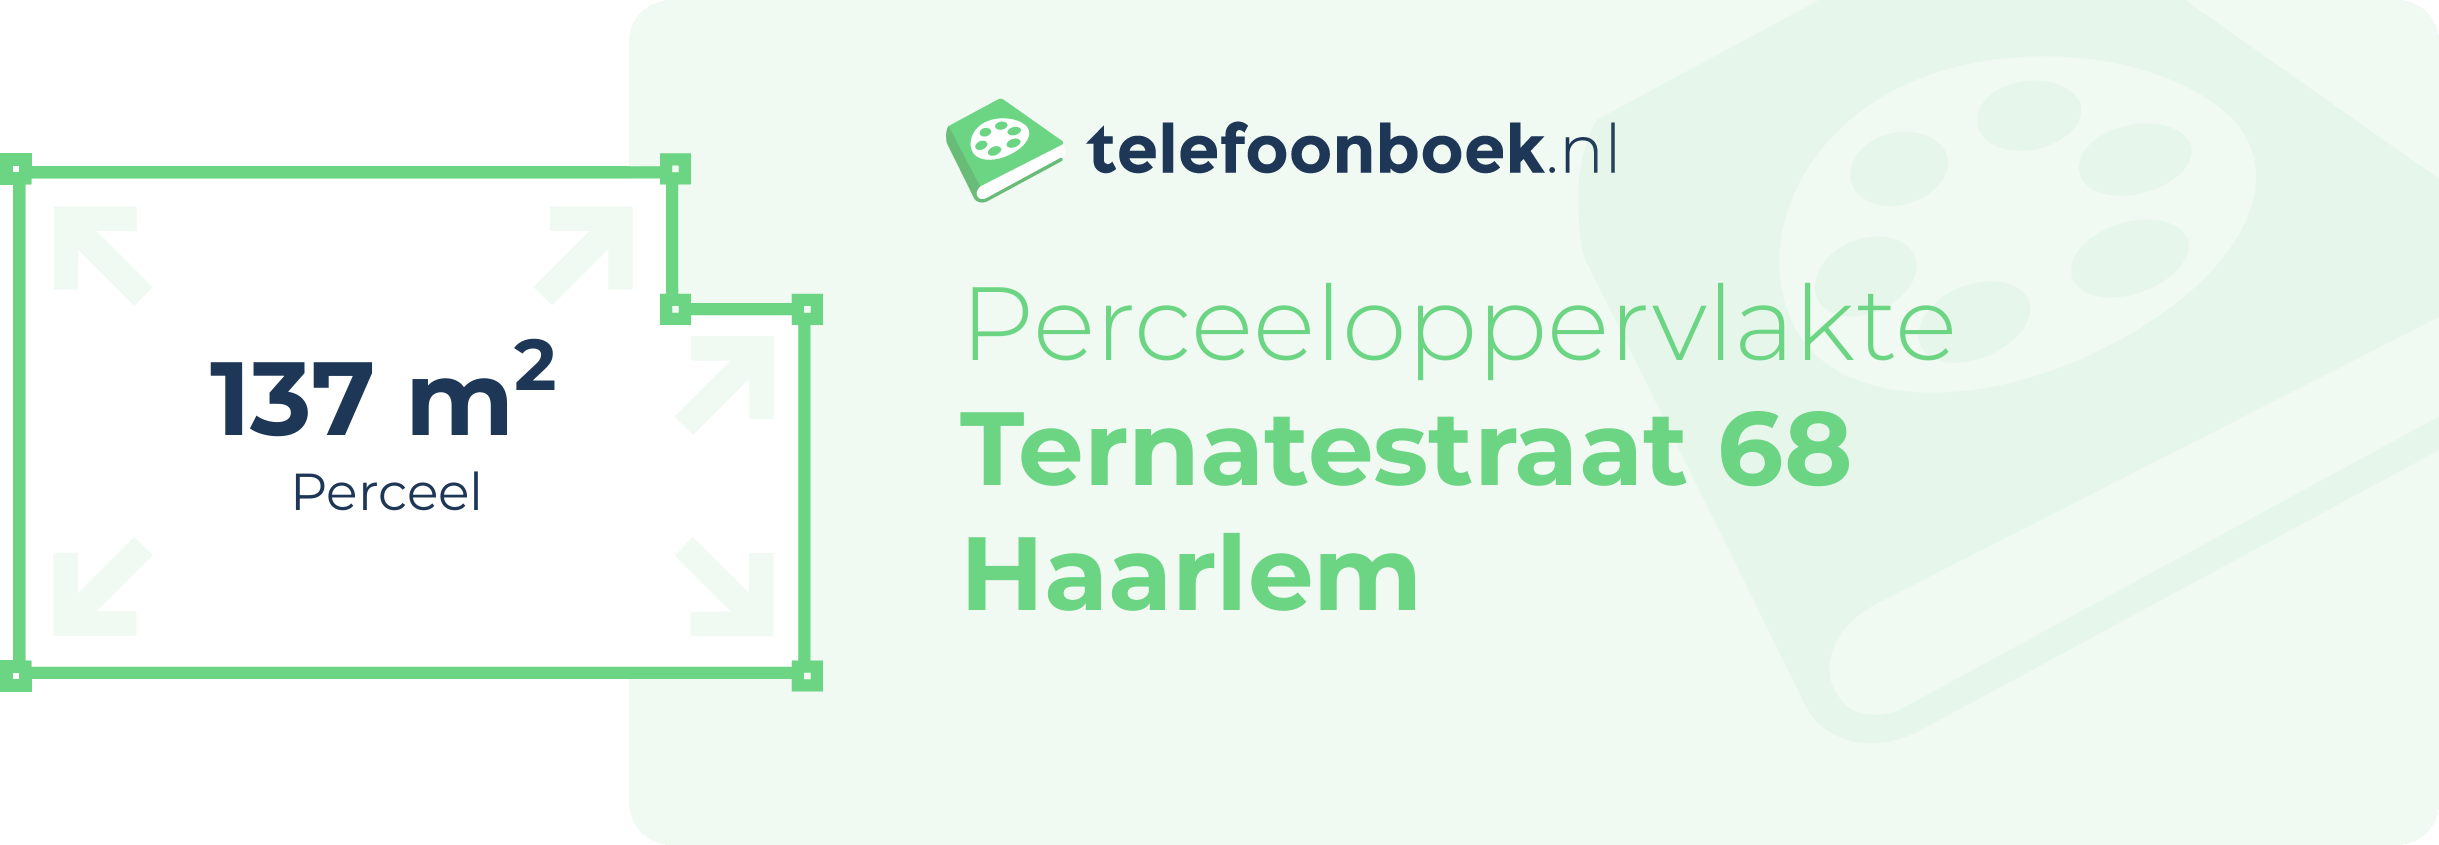 Perceeloppervlakte Ternatestraat 68 Haarlem